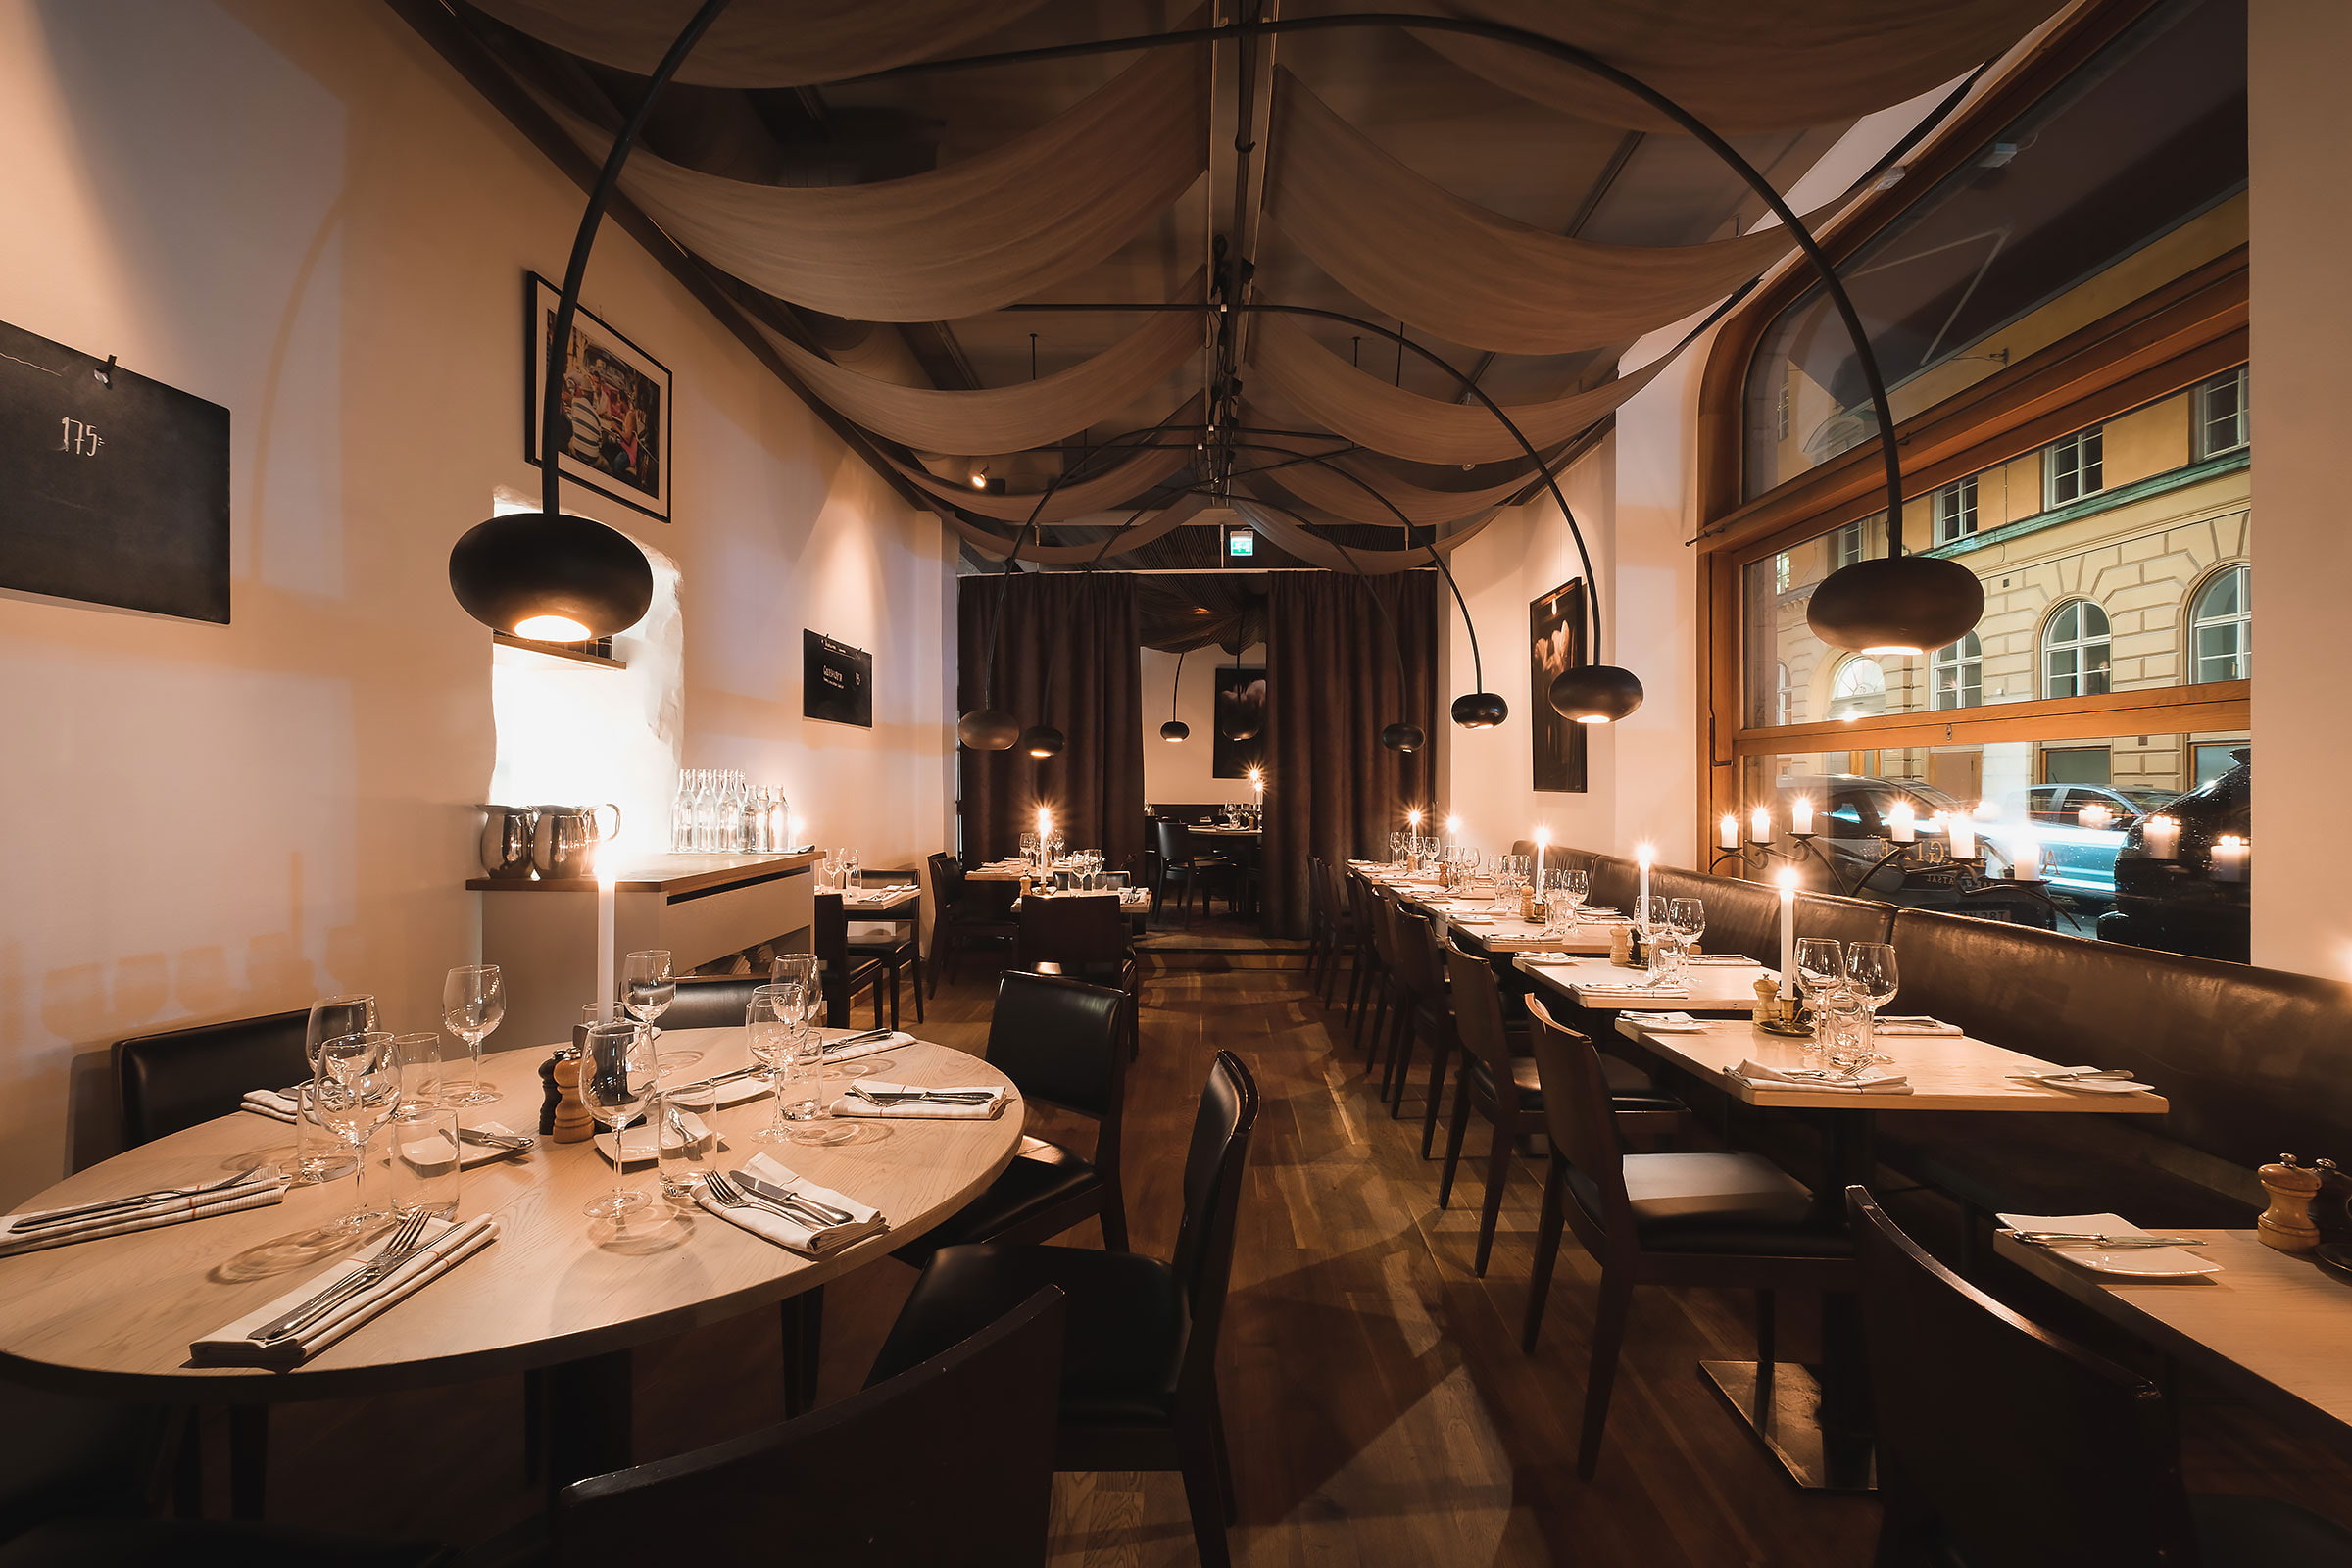 The guide to Stockholm's best neighbourhood restaurants